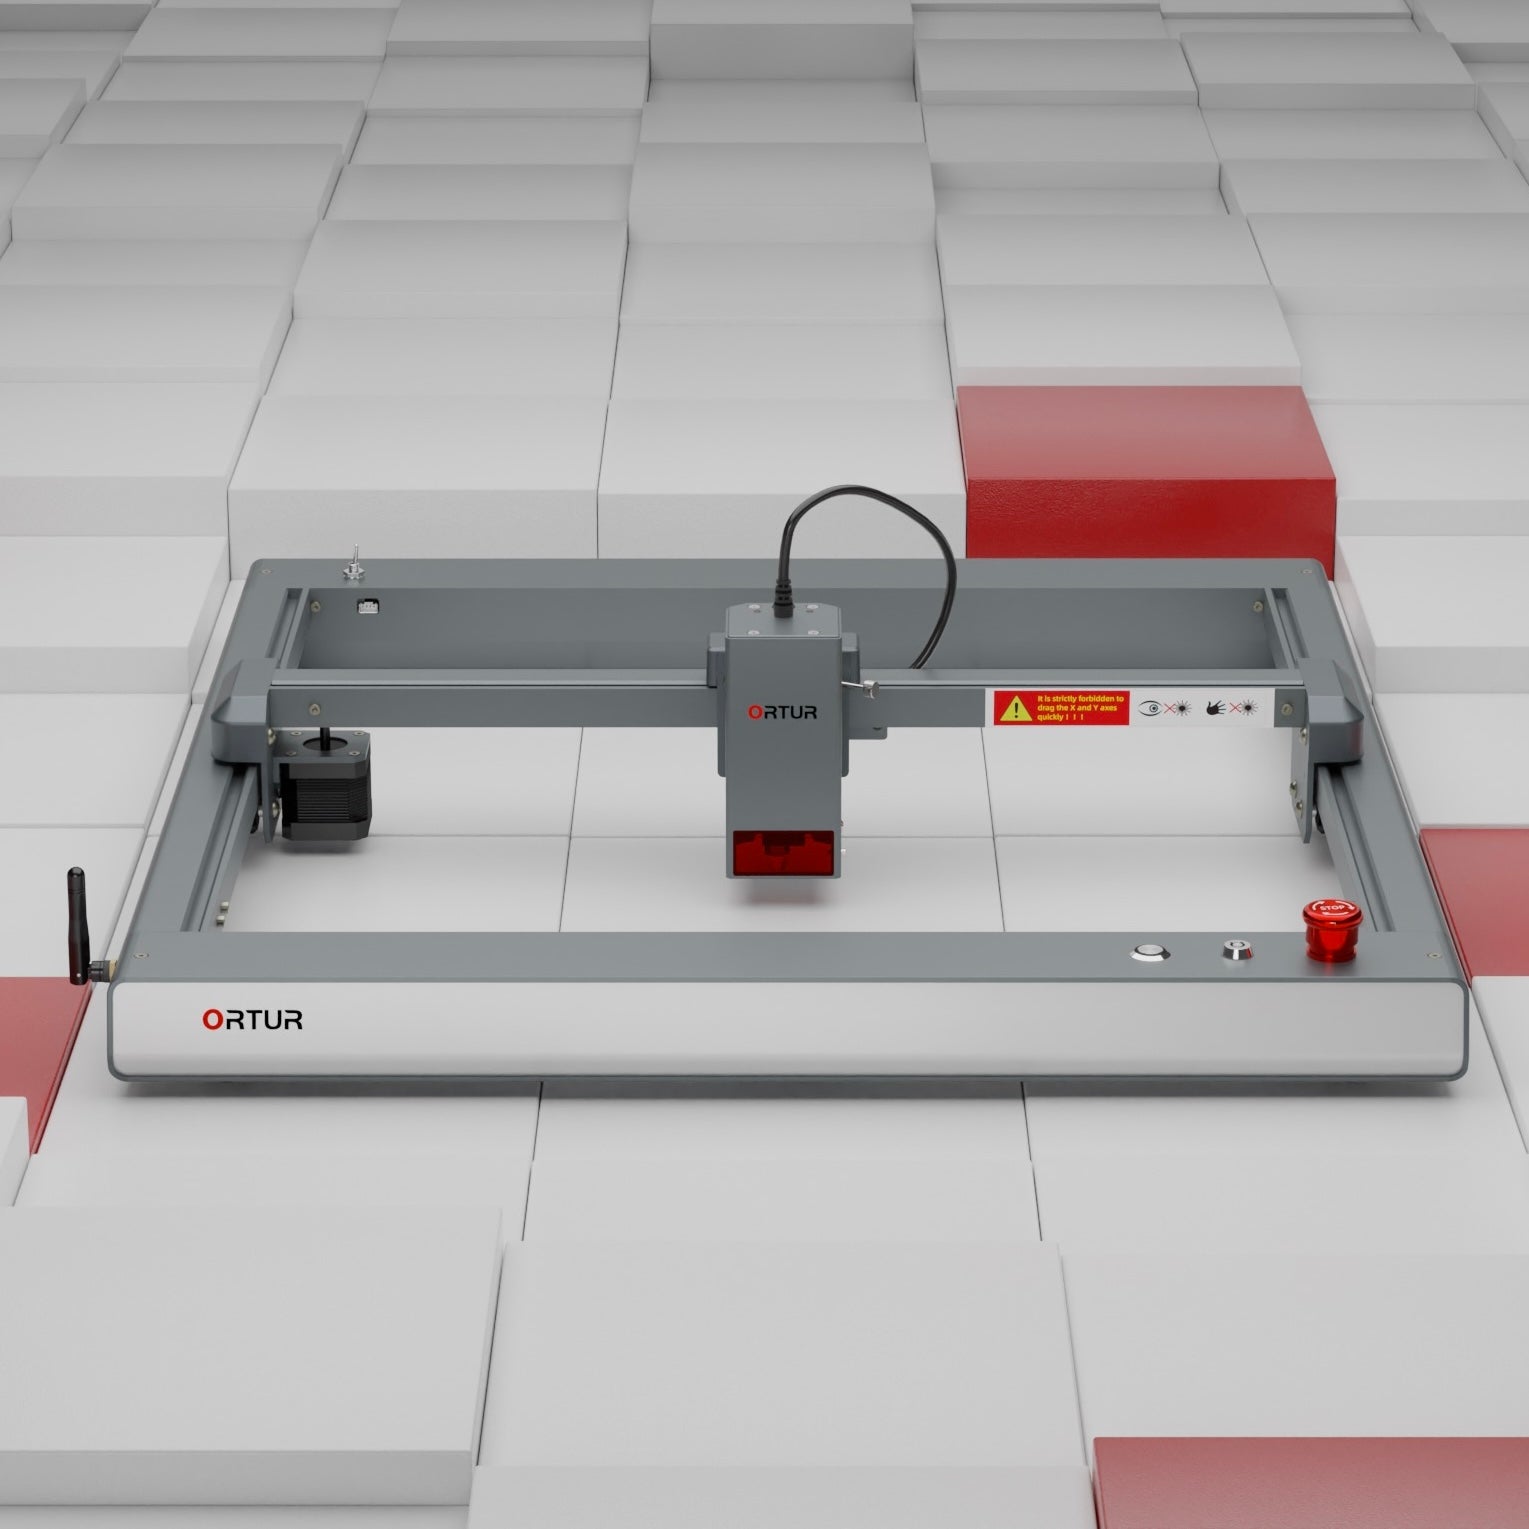 Tutorial of installing the LU3-20A Laser Module on Ortur Laser Engraver